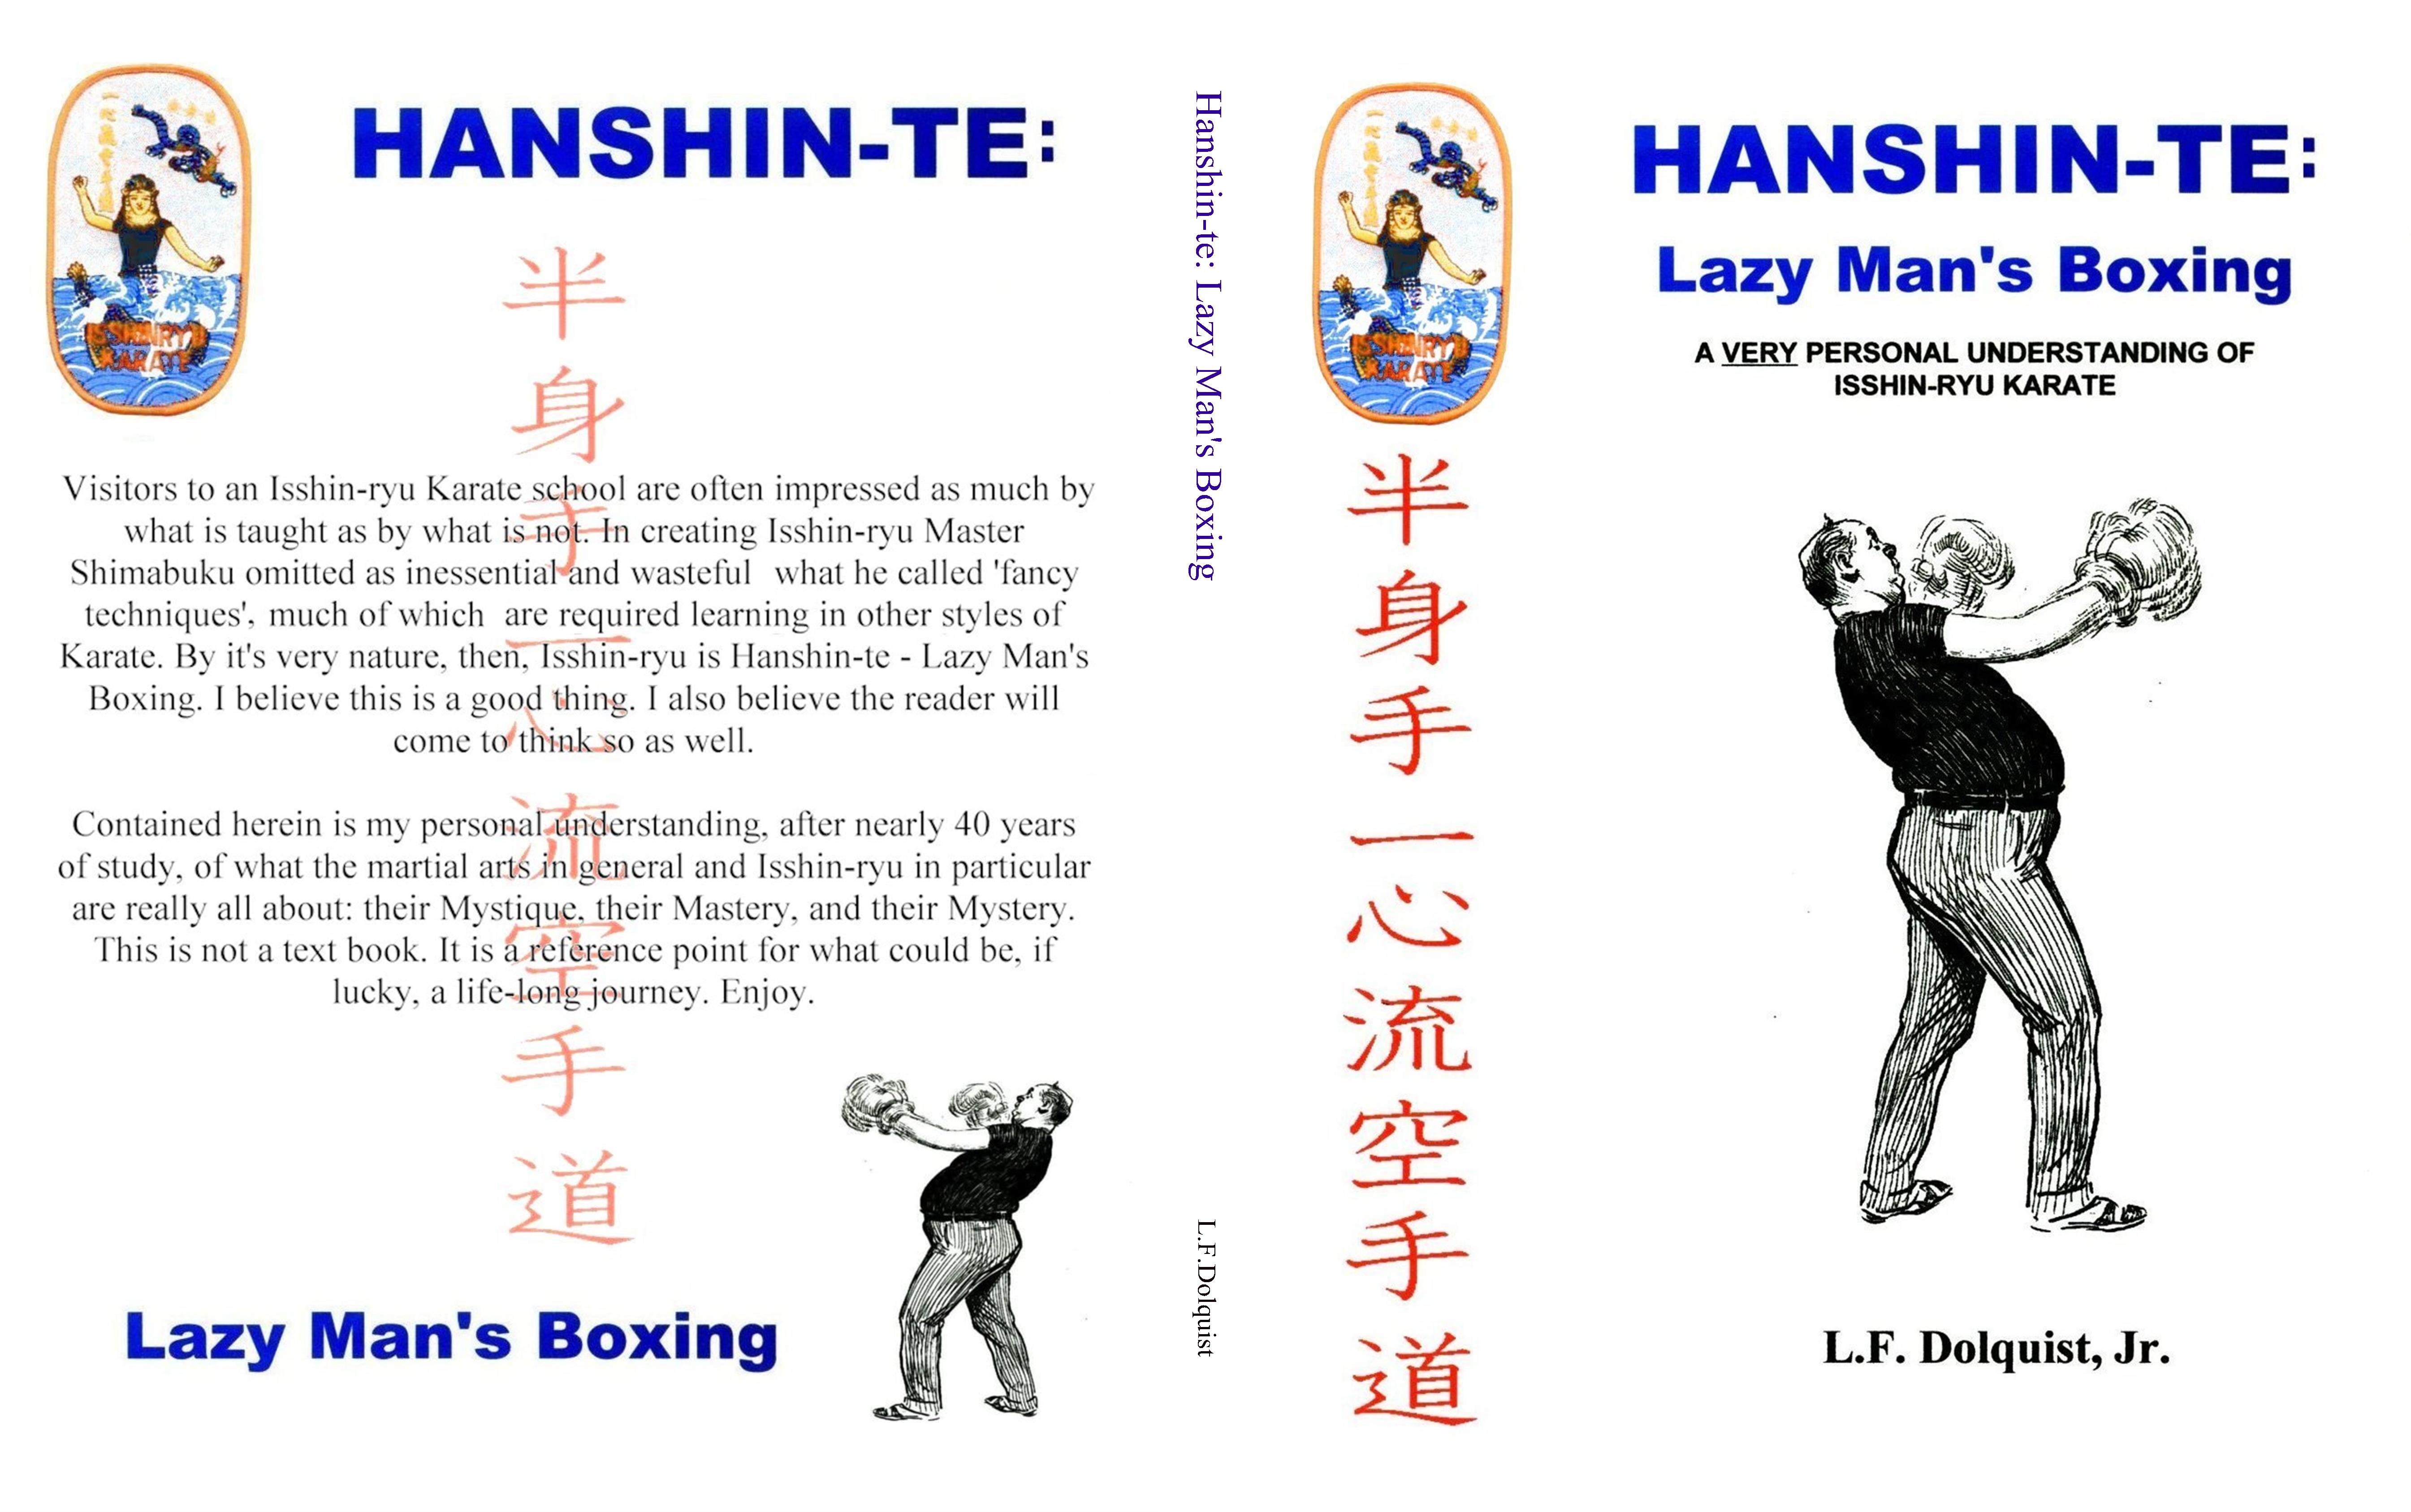 Hanshin-te: Lazy Man